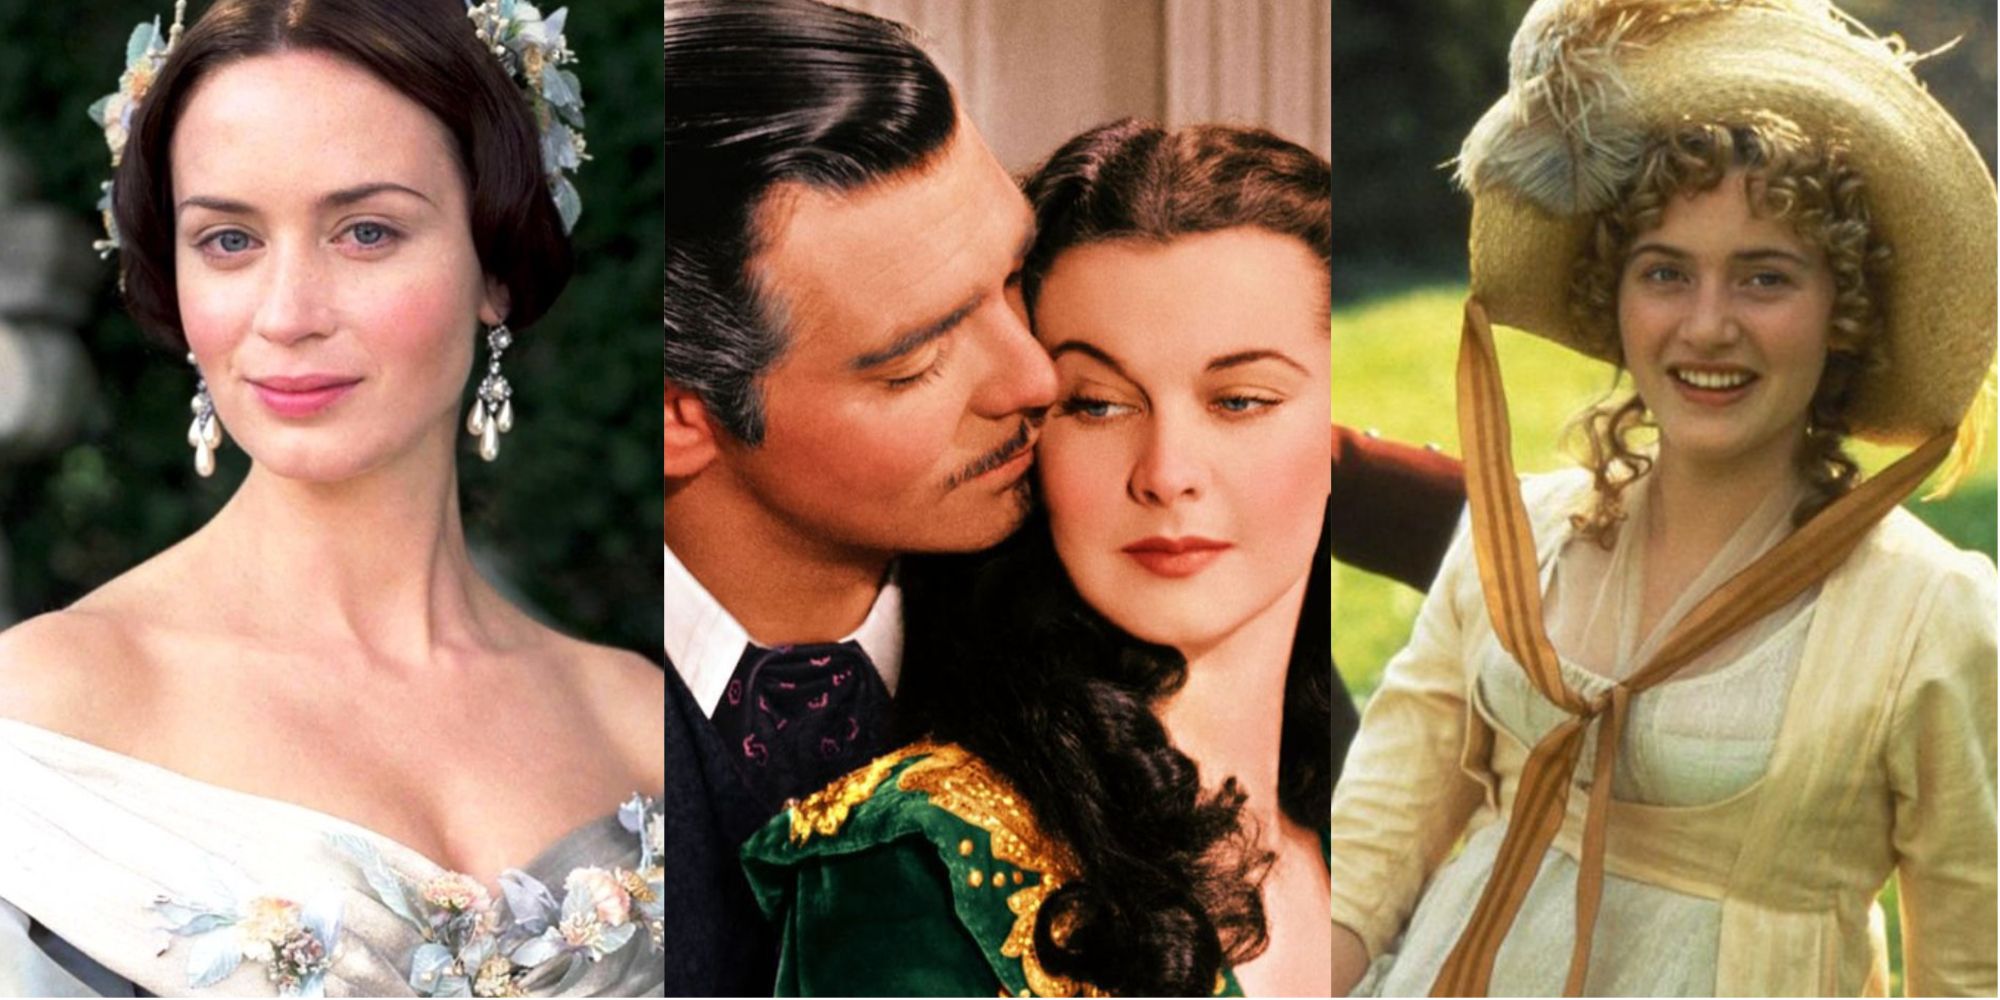 10 Best Romantic Period Dramas According to IMDb